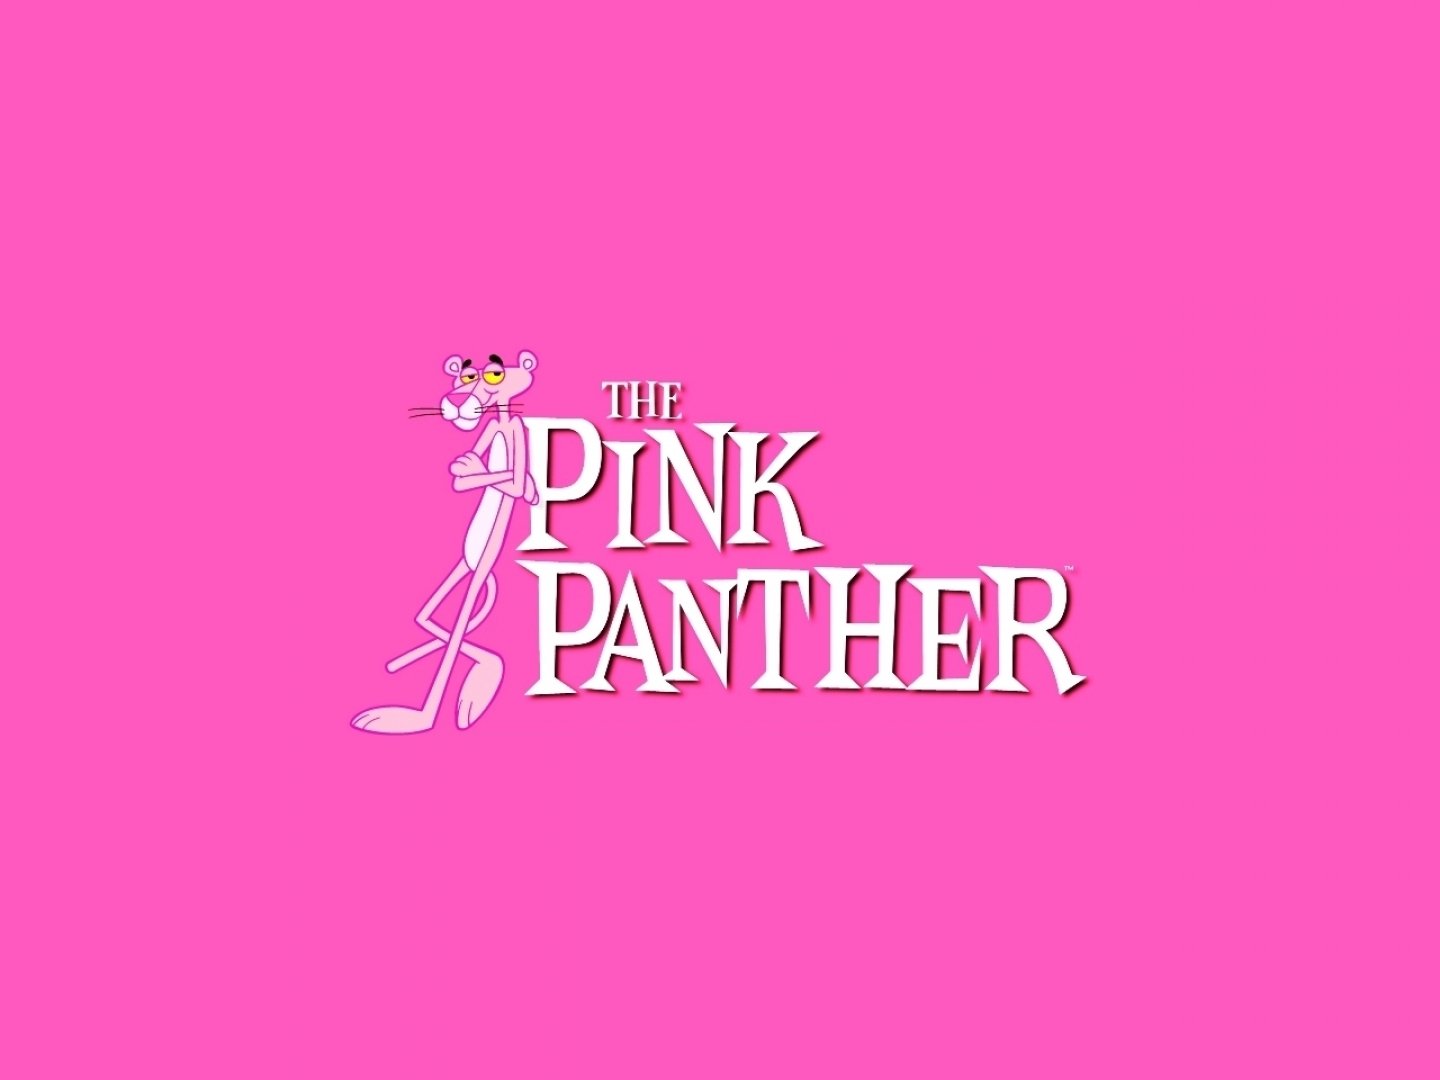 Pink Panther ピンクパンサー Pink Panther スマホ Pcデスクトップ